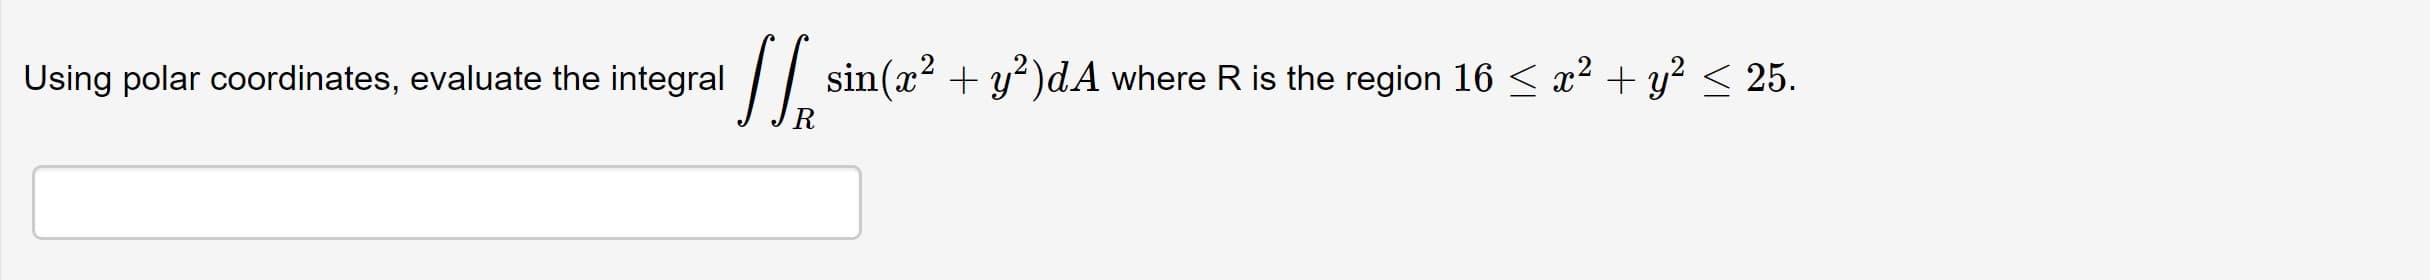 Using polar coordinates, evaluate the integral
sin(x? + y?)dA where R is the region 16 < x2 + y² < 25.
